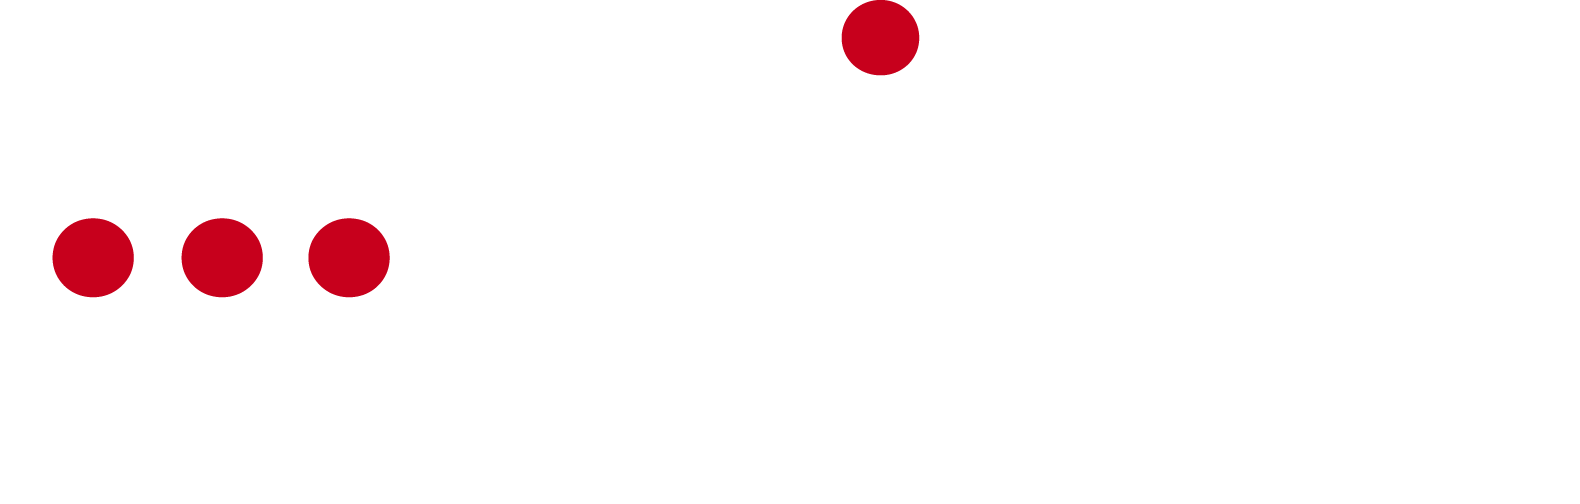 Zing Dev Limited - Twilio Gold Partner